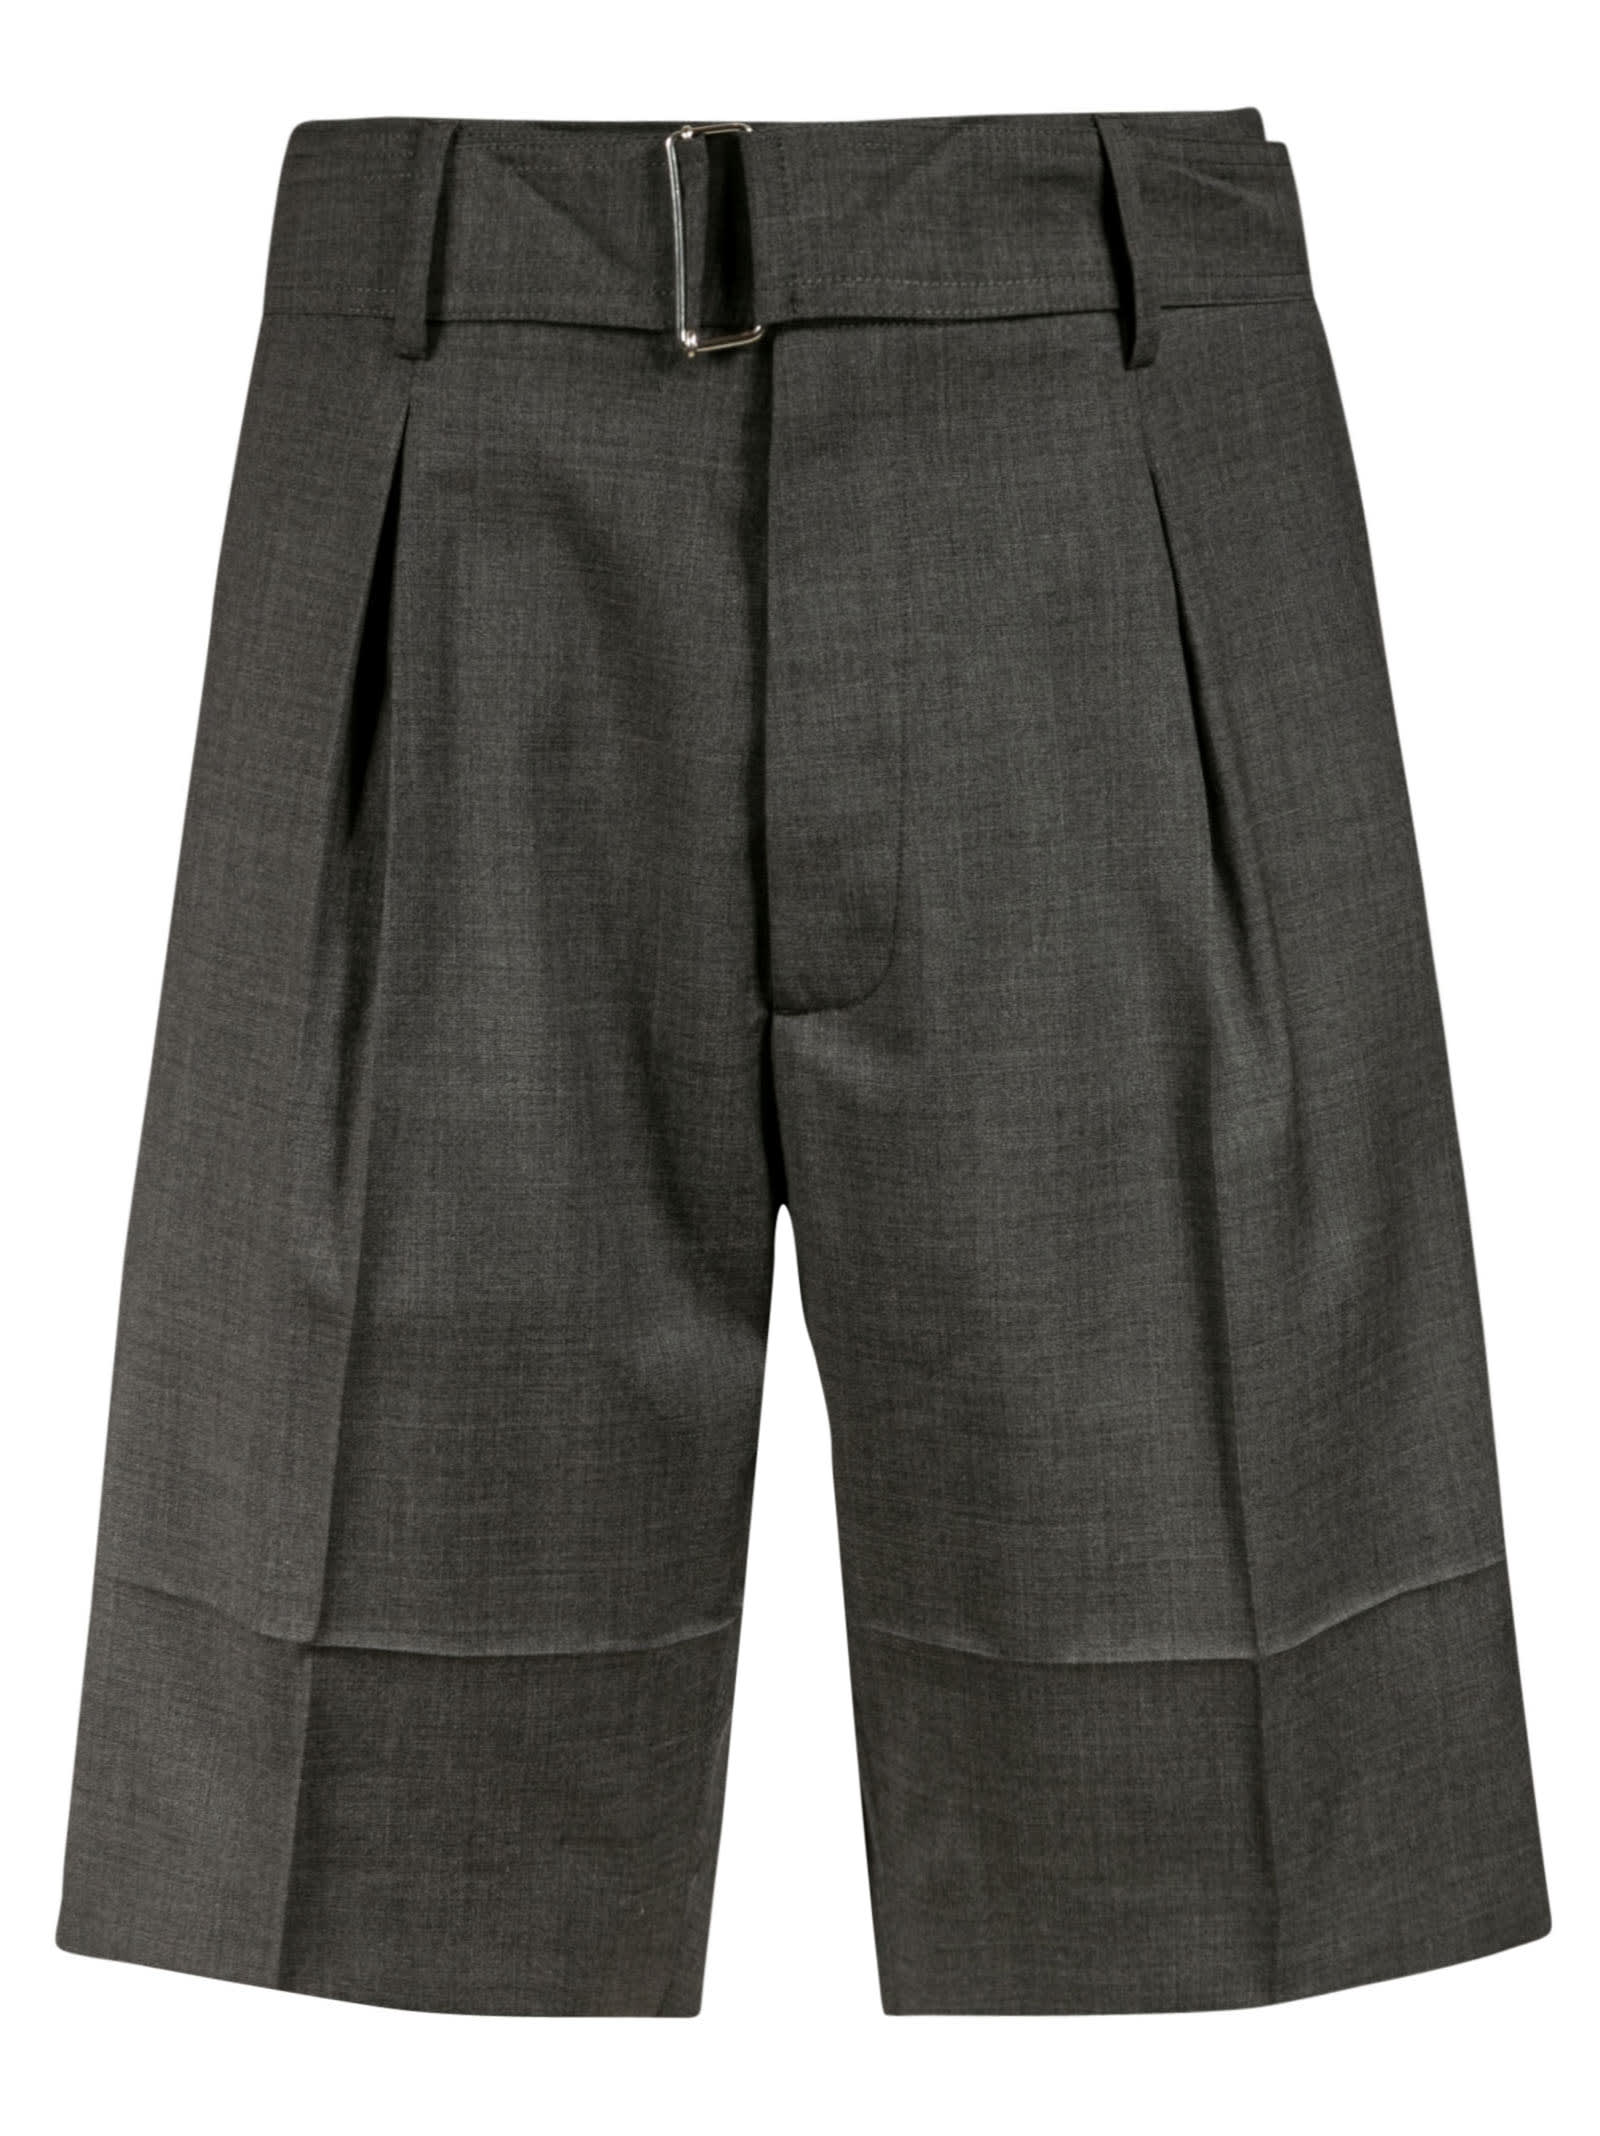 N.21 Belted Plain Shorts